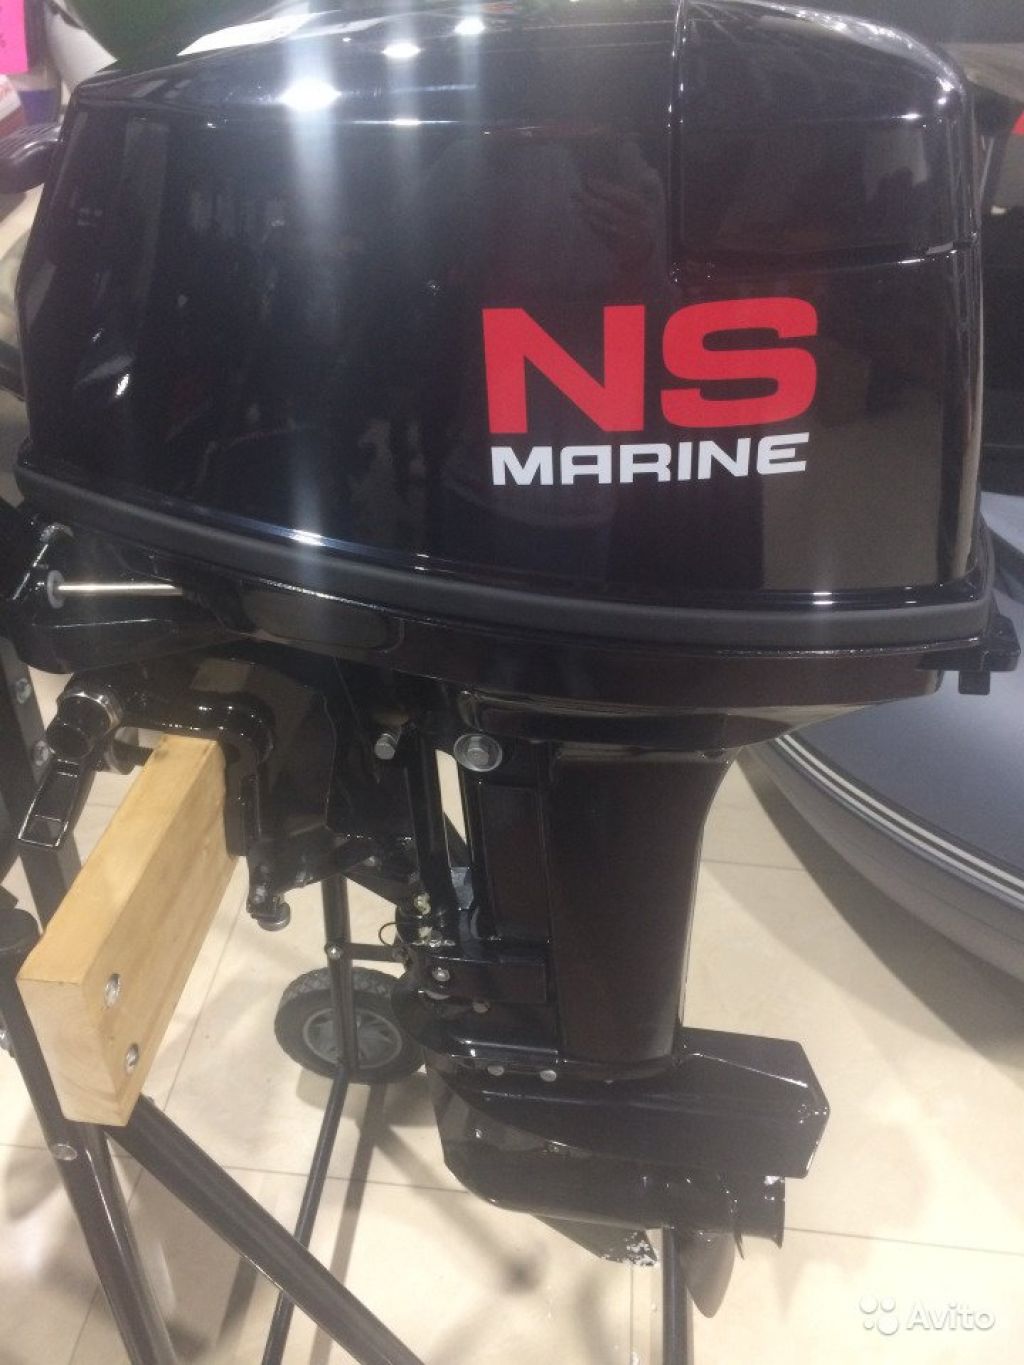 Nissan marine 9.8. Nissan Marine 9.9. NS Marine 9.9 моторный двигатель.